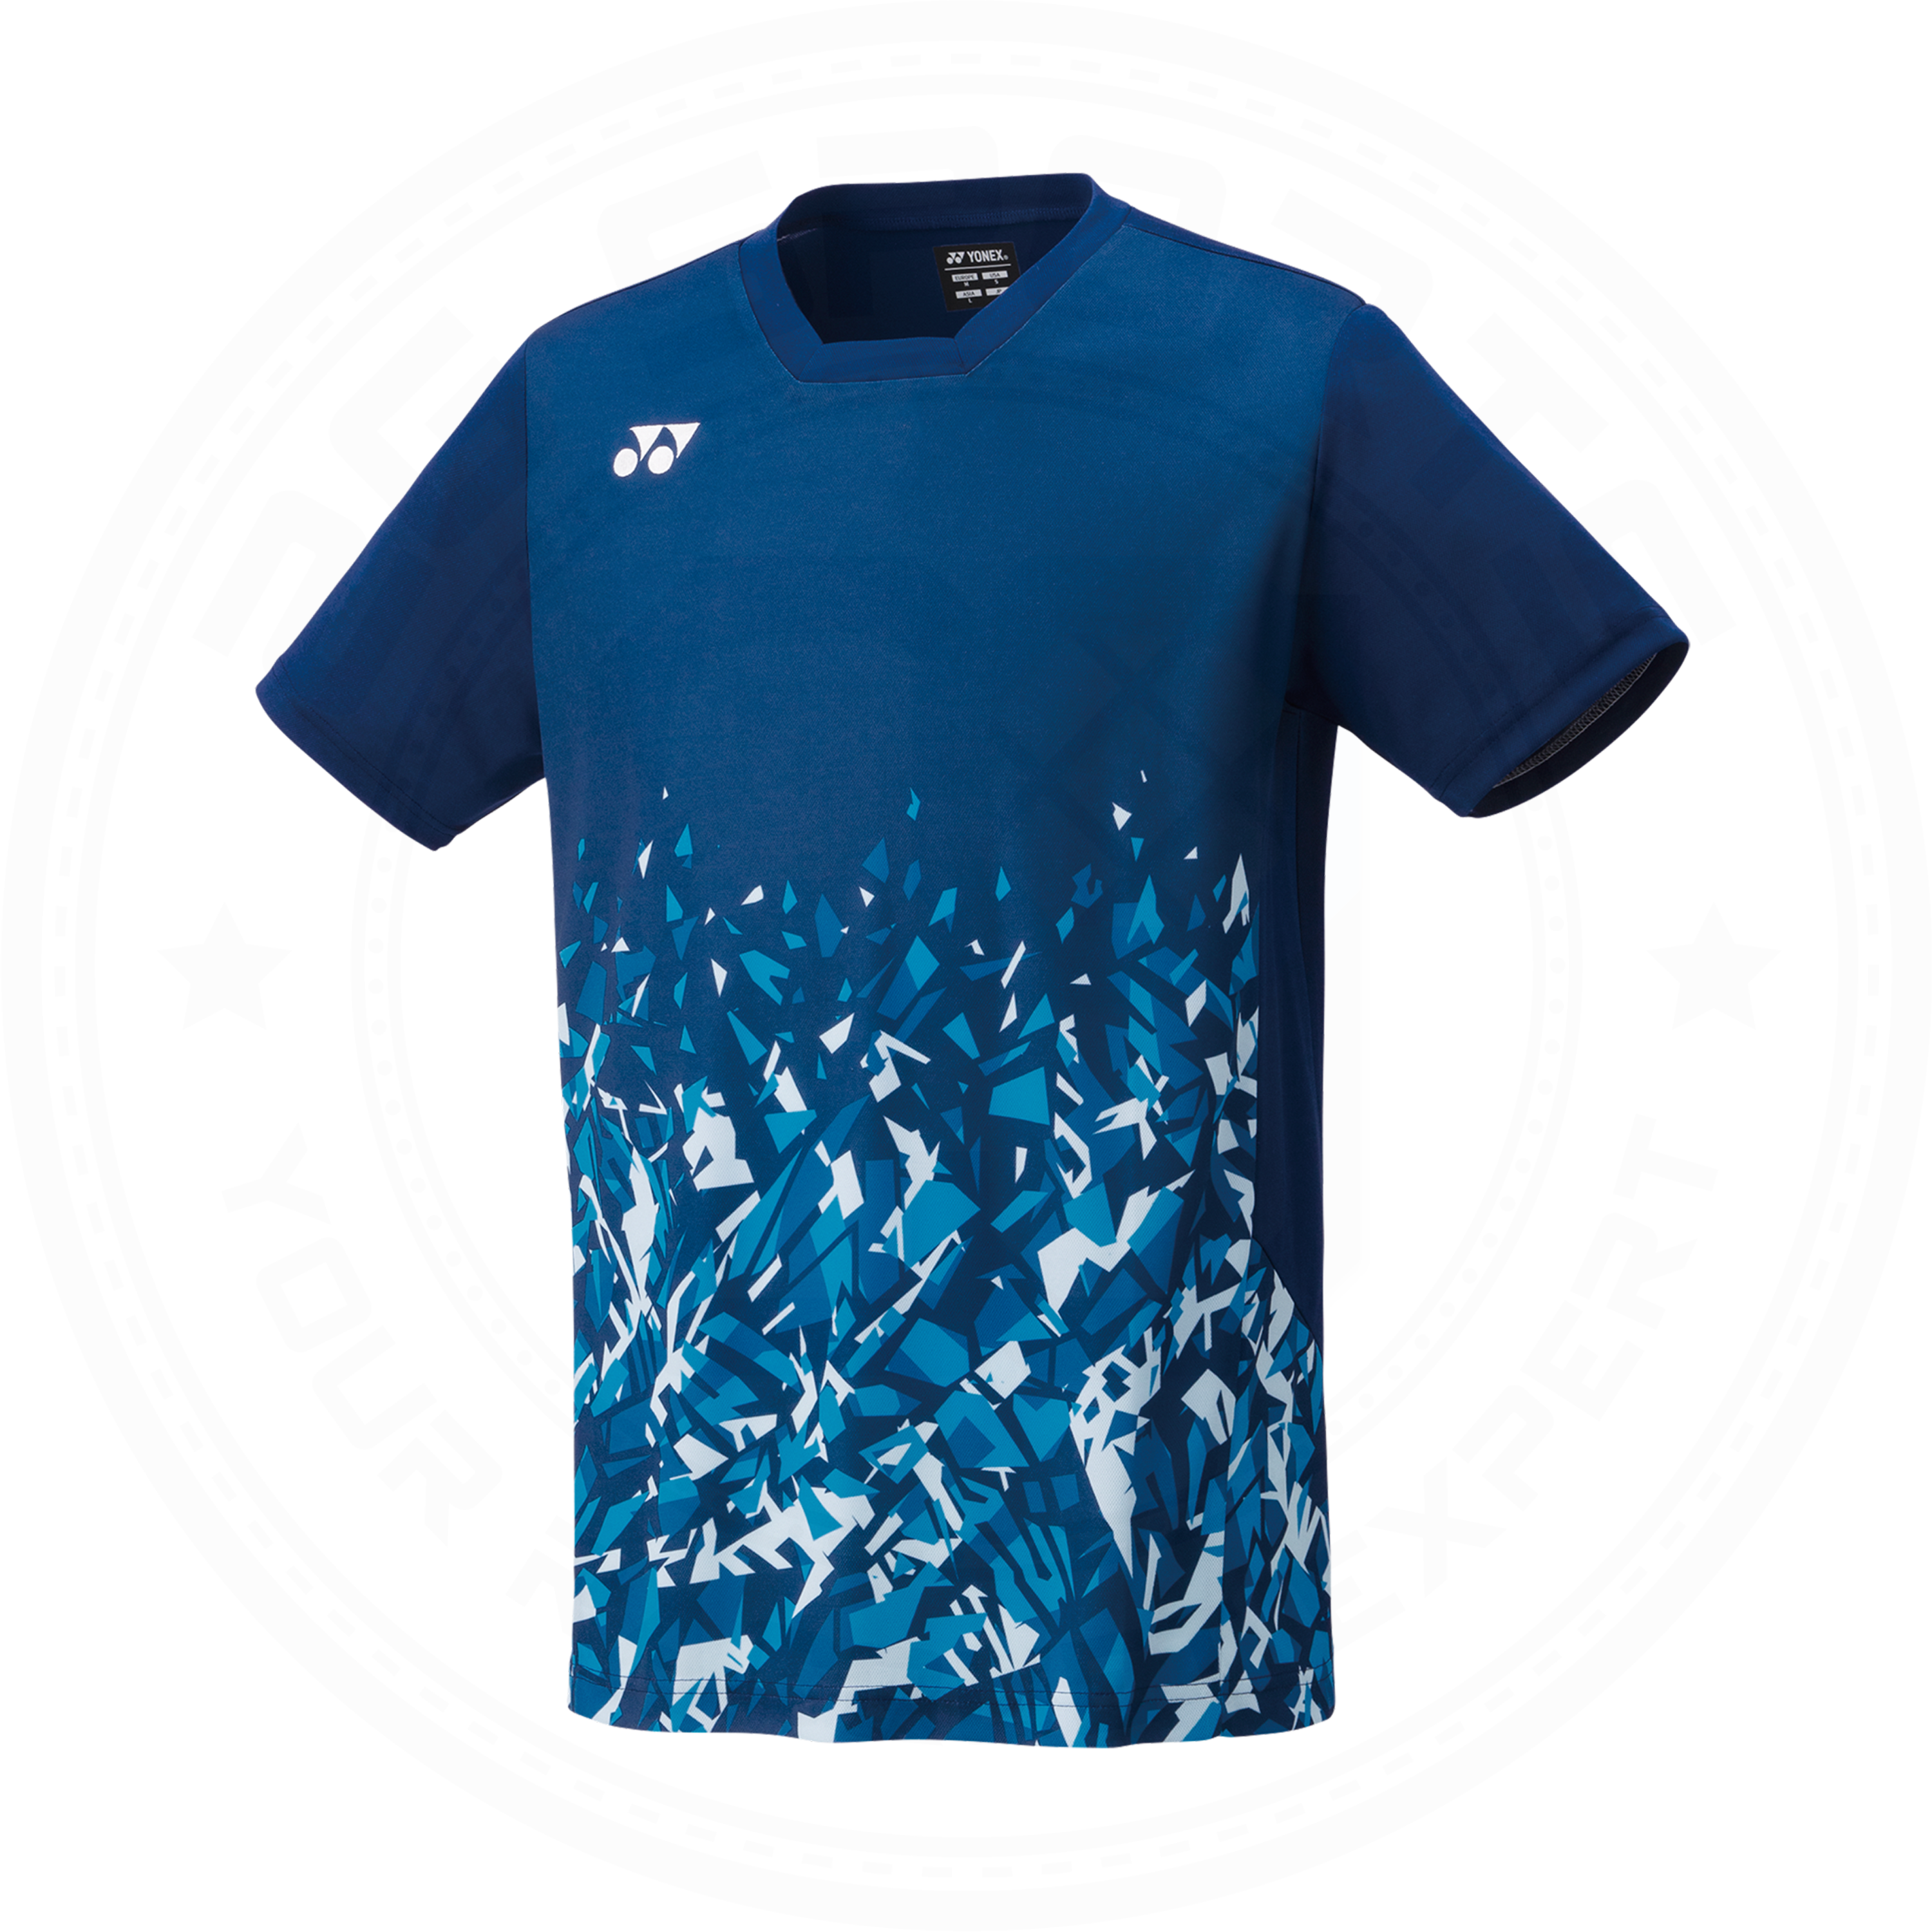 Yonex Japan National Badminton/ Sports Shirt 10551EX Midnight UNISEX (Clearance)